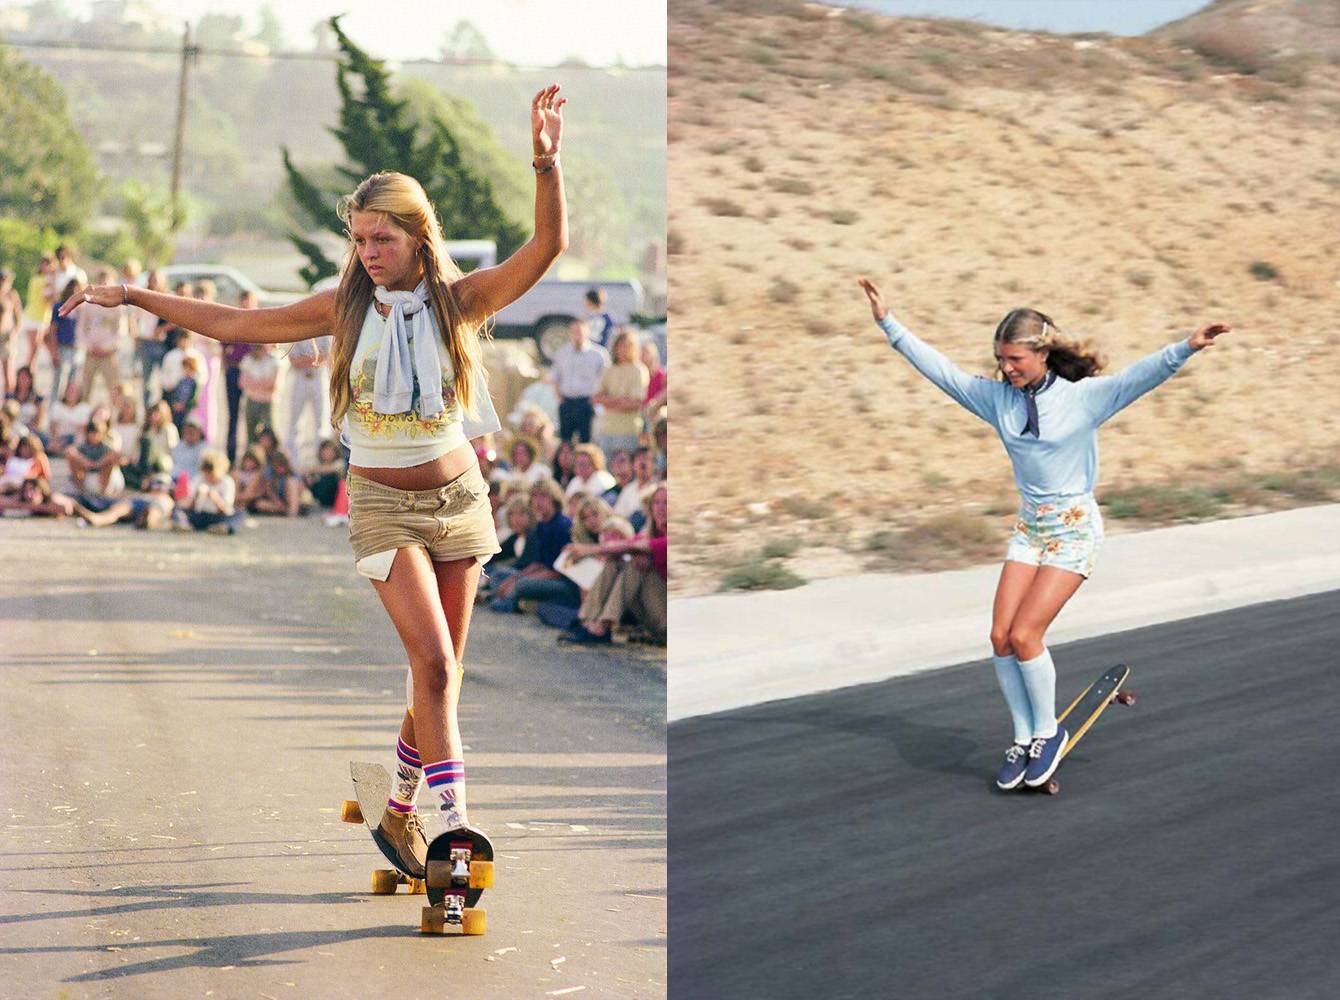 sobre-ruedas-long-days-longboard-dancing-ellen-oneal-skateboarding-freestyle-sidewalks-dogtown-surf-oldschool-skateboard-girl-01-hugh-holland